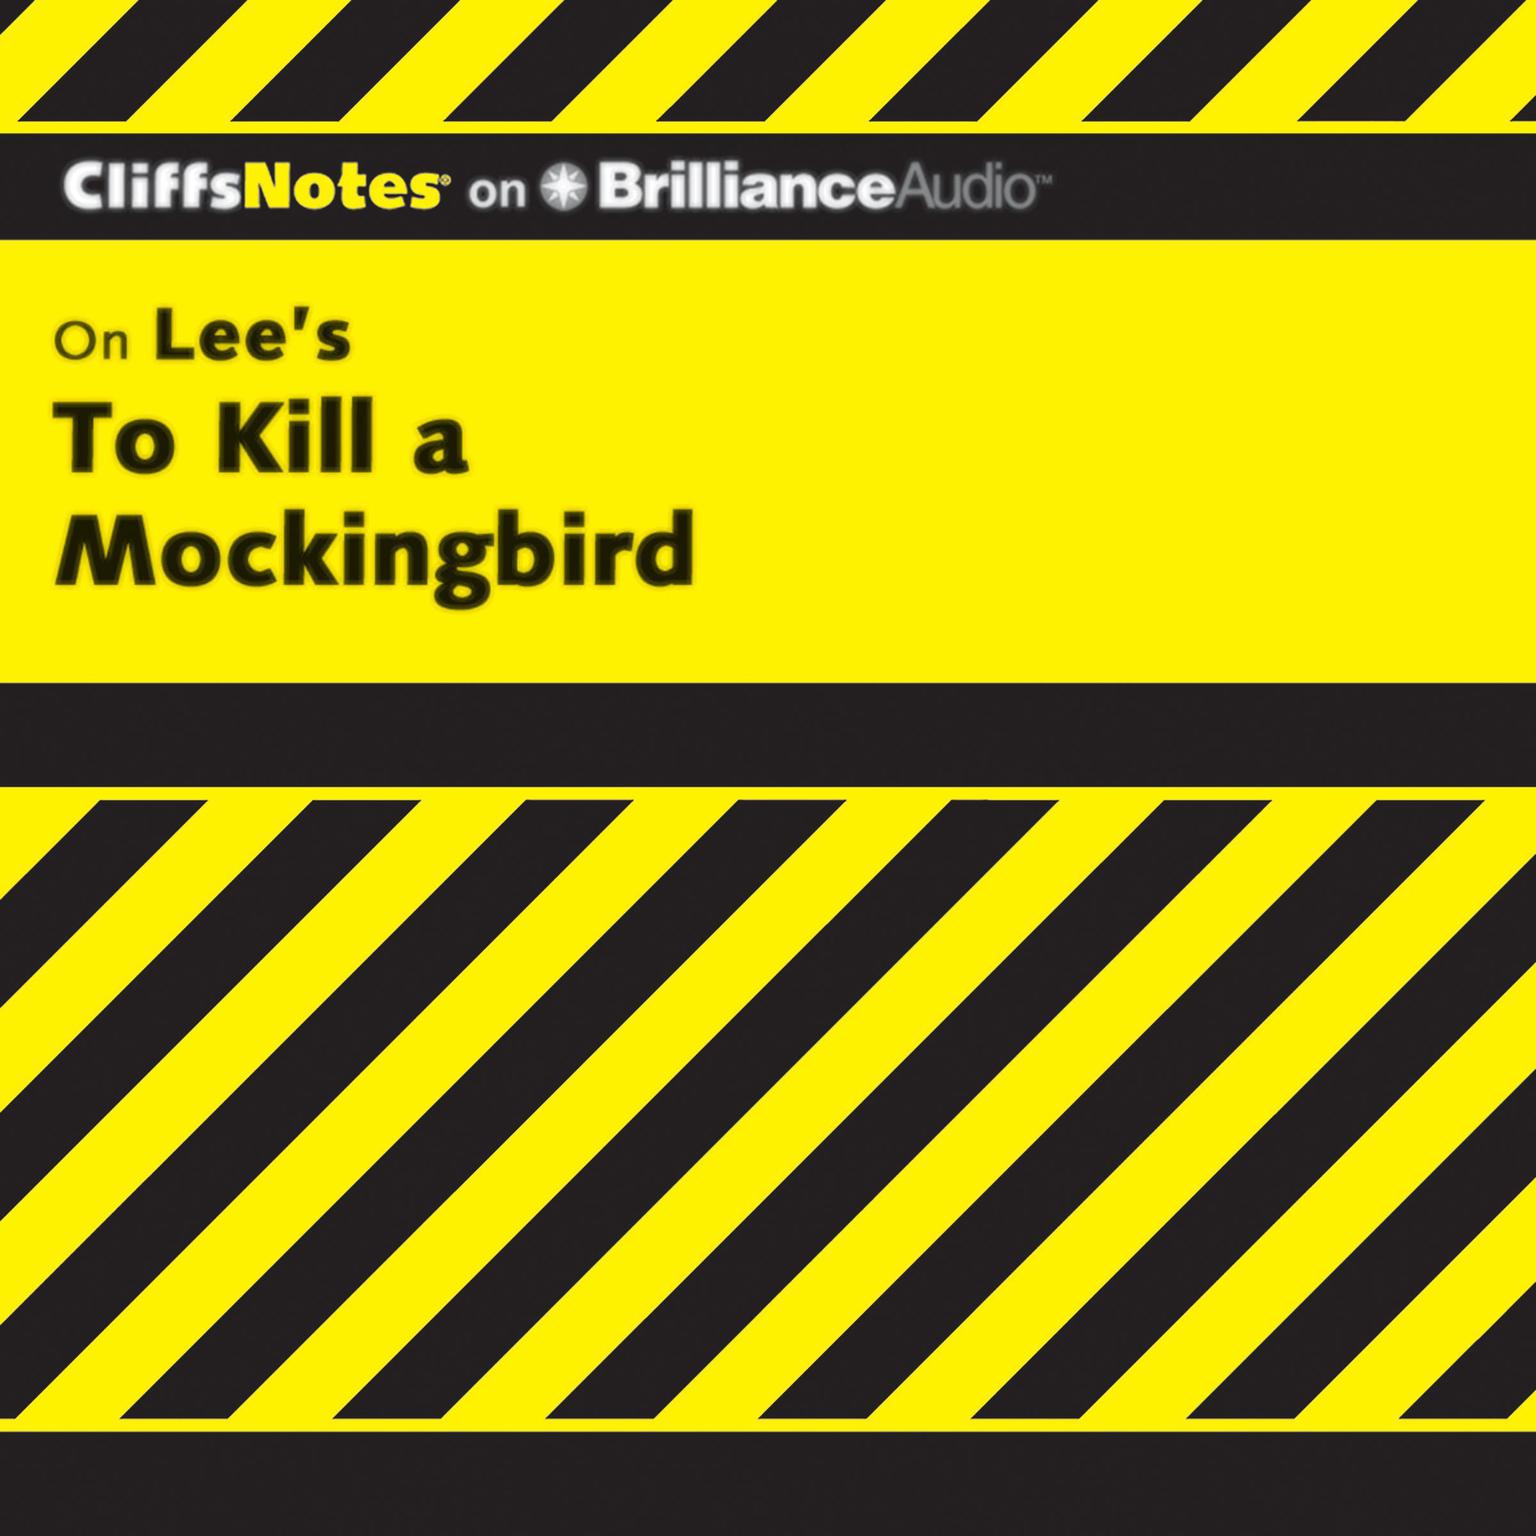 To Kill a Mockingbird Audiobook, by Tamara Castleman